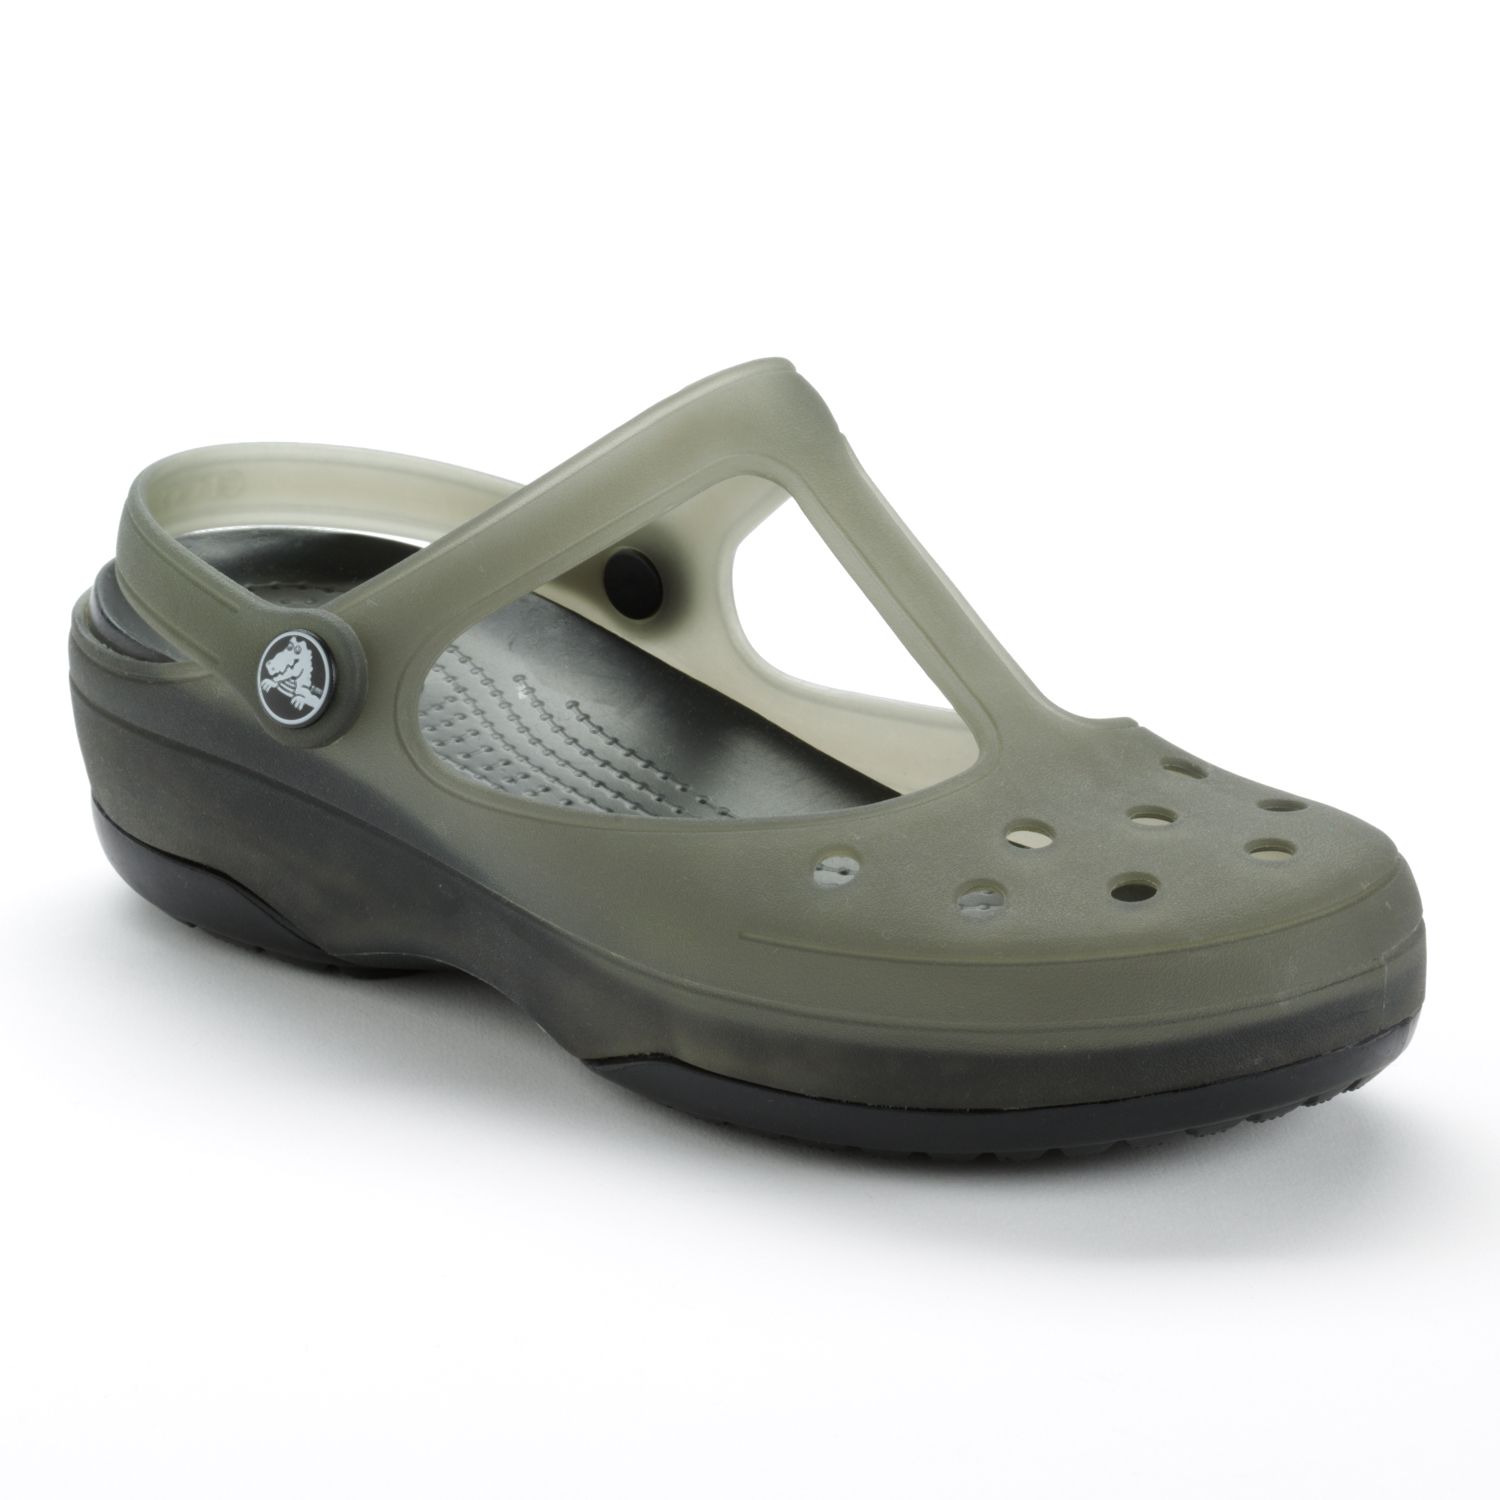 mary jane crocs shoes